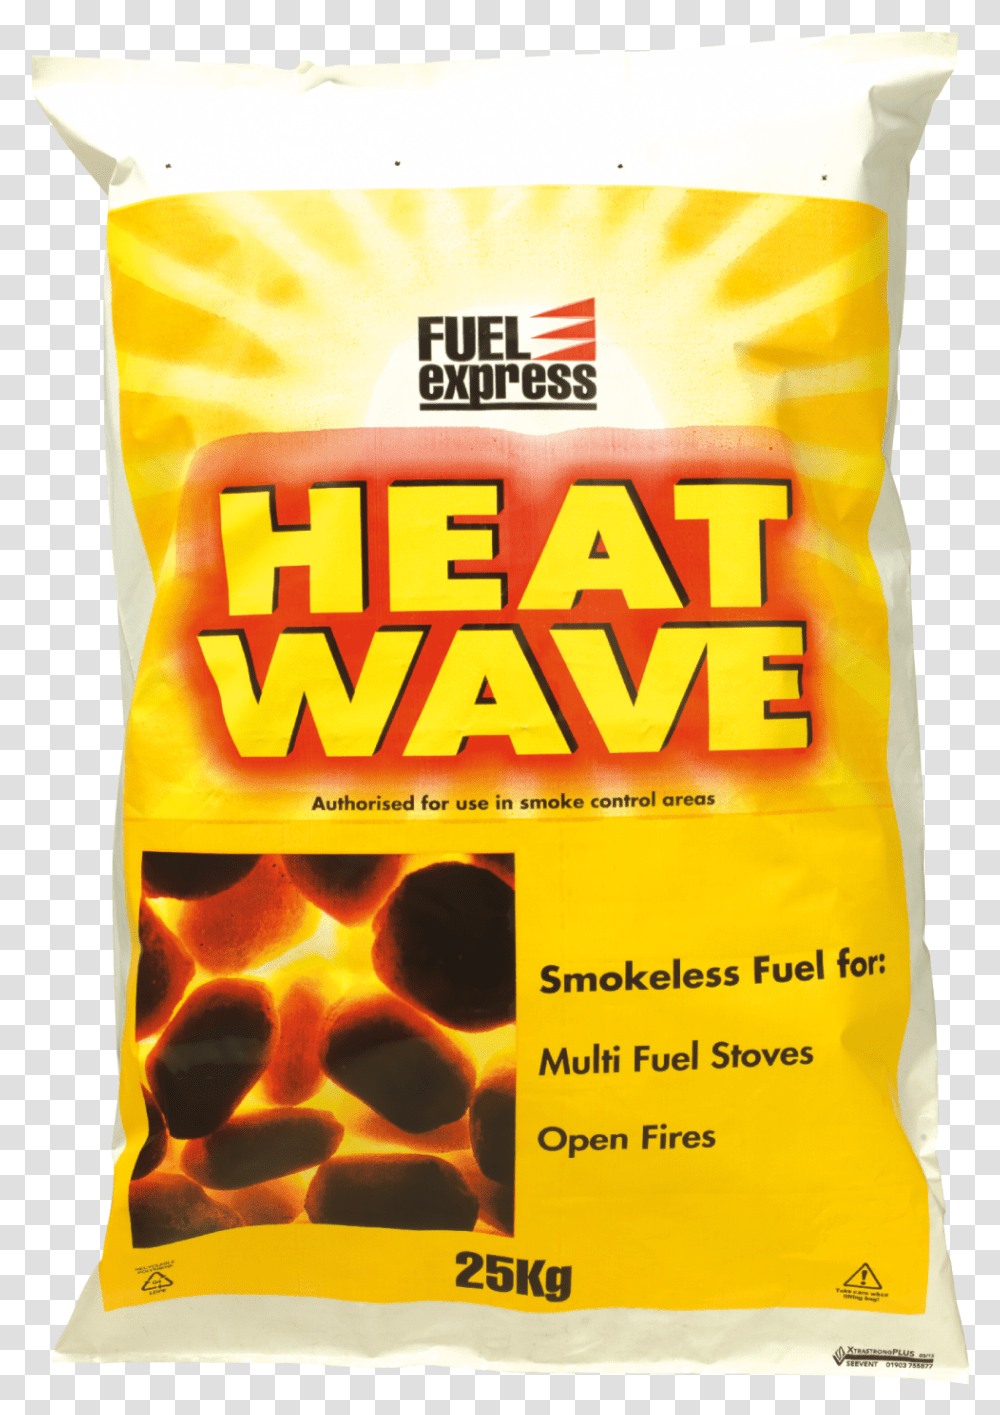 Heat Wave 15kg Fuel Express, Plant, Poster, Advertisement Transparent Png